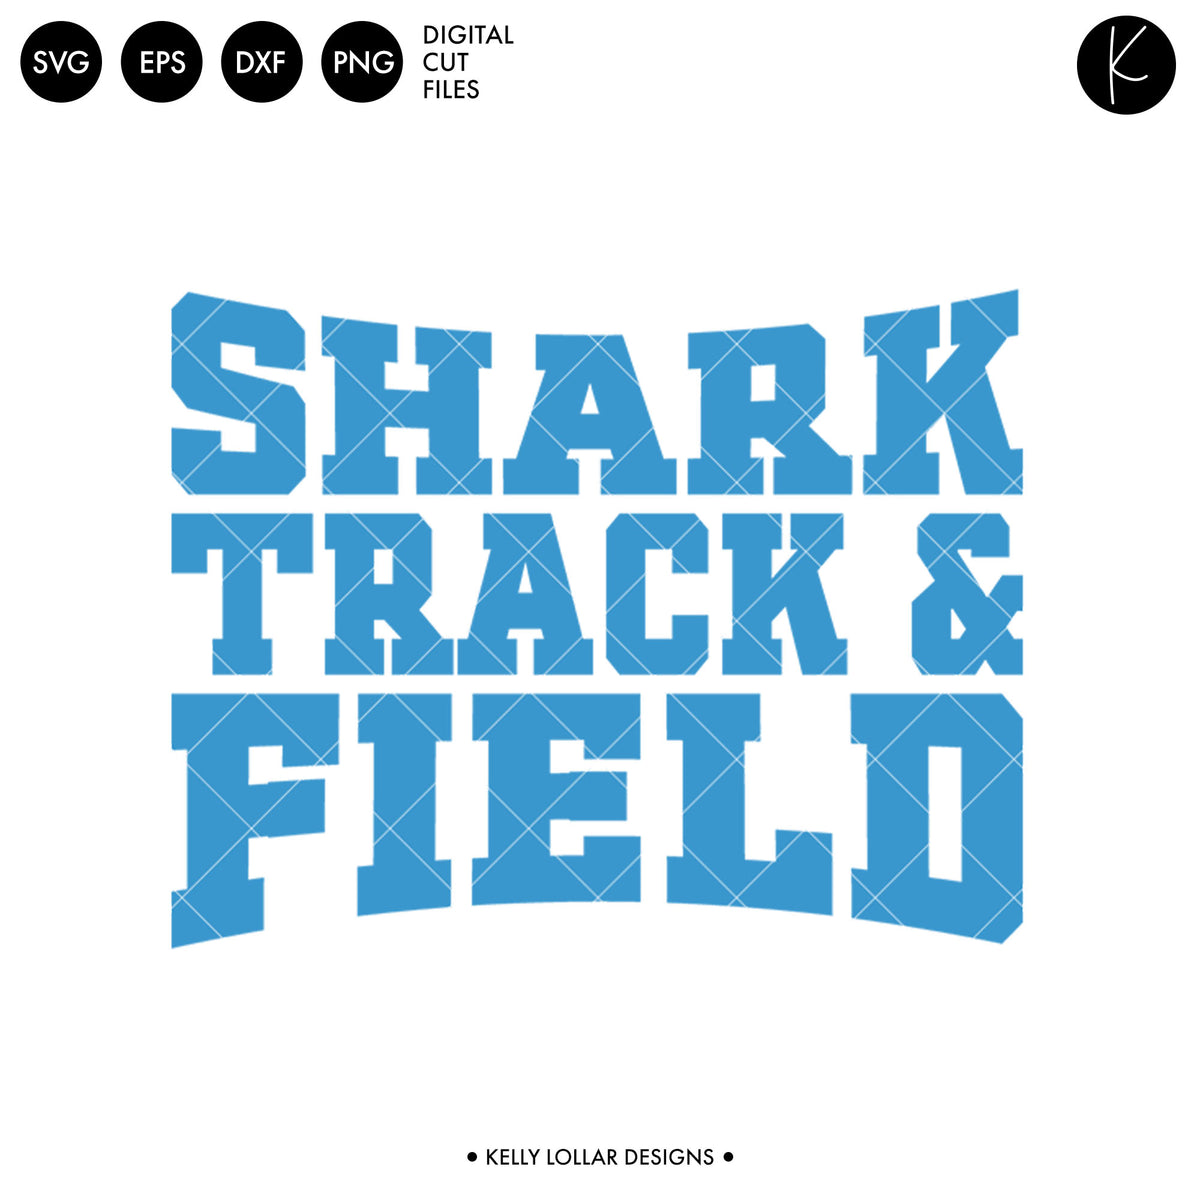 Sharks Track &amp; Field Bundle | SVG DXF EPS PNG Cut Files